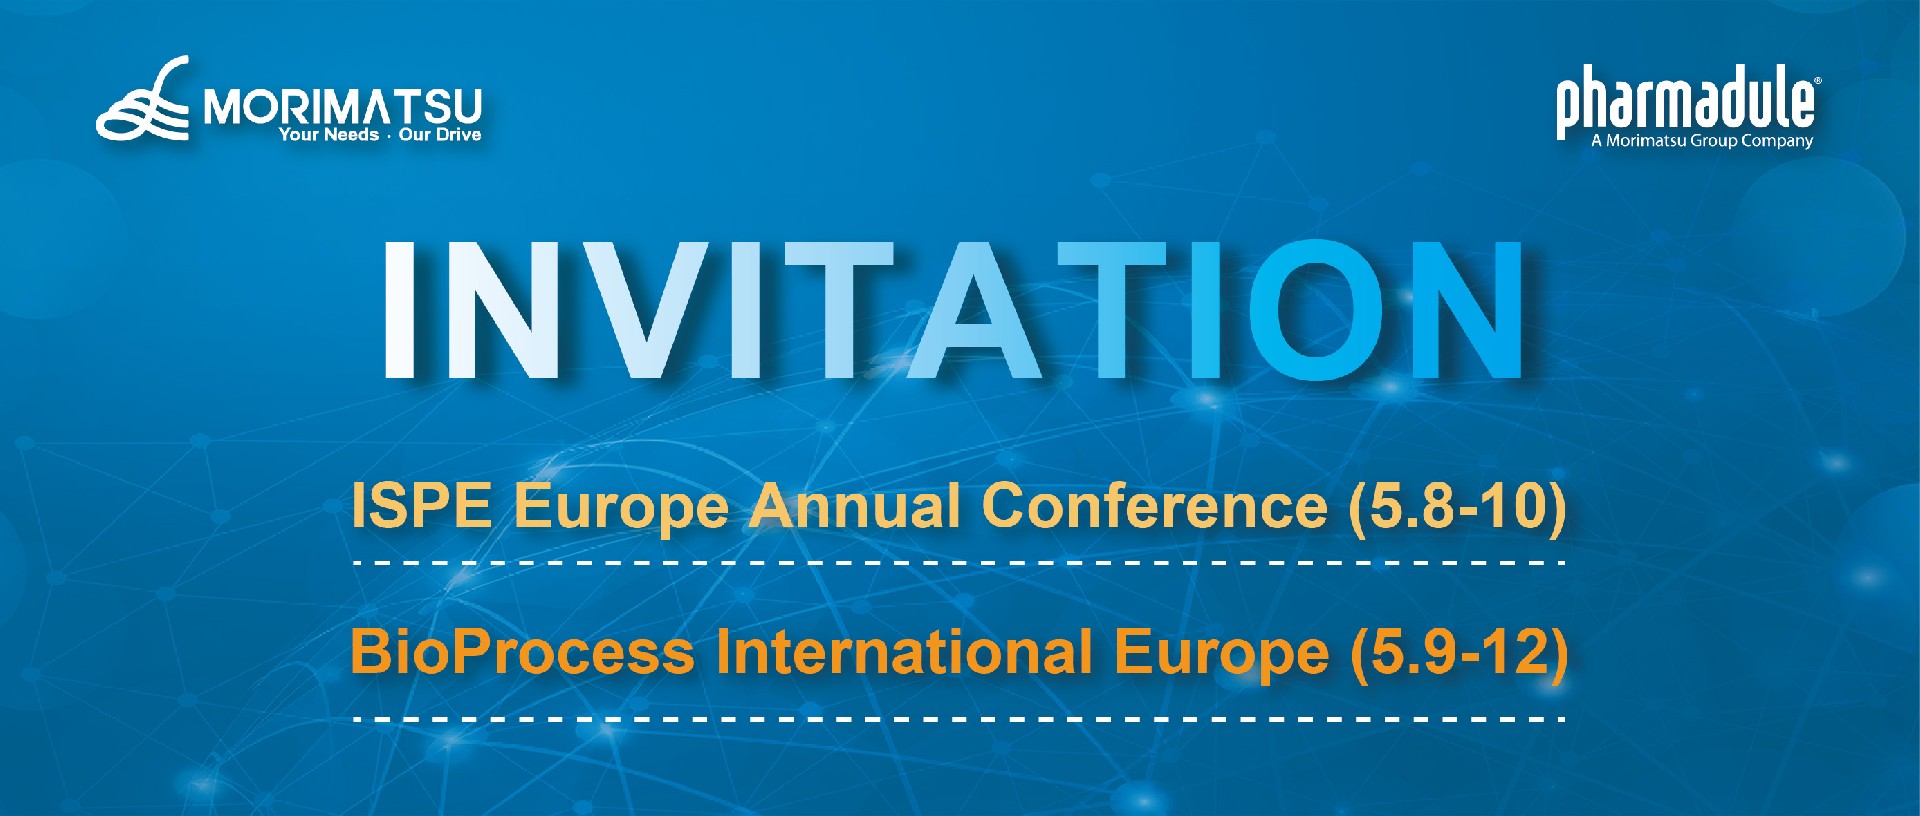 Invitation | Pharmadule Morimatsu AB invites you to attend ISPE Europe Annual Conference & BPI Europe